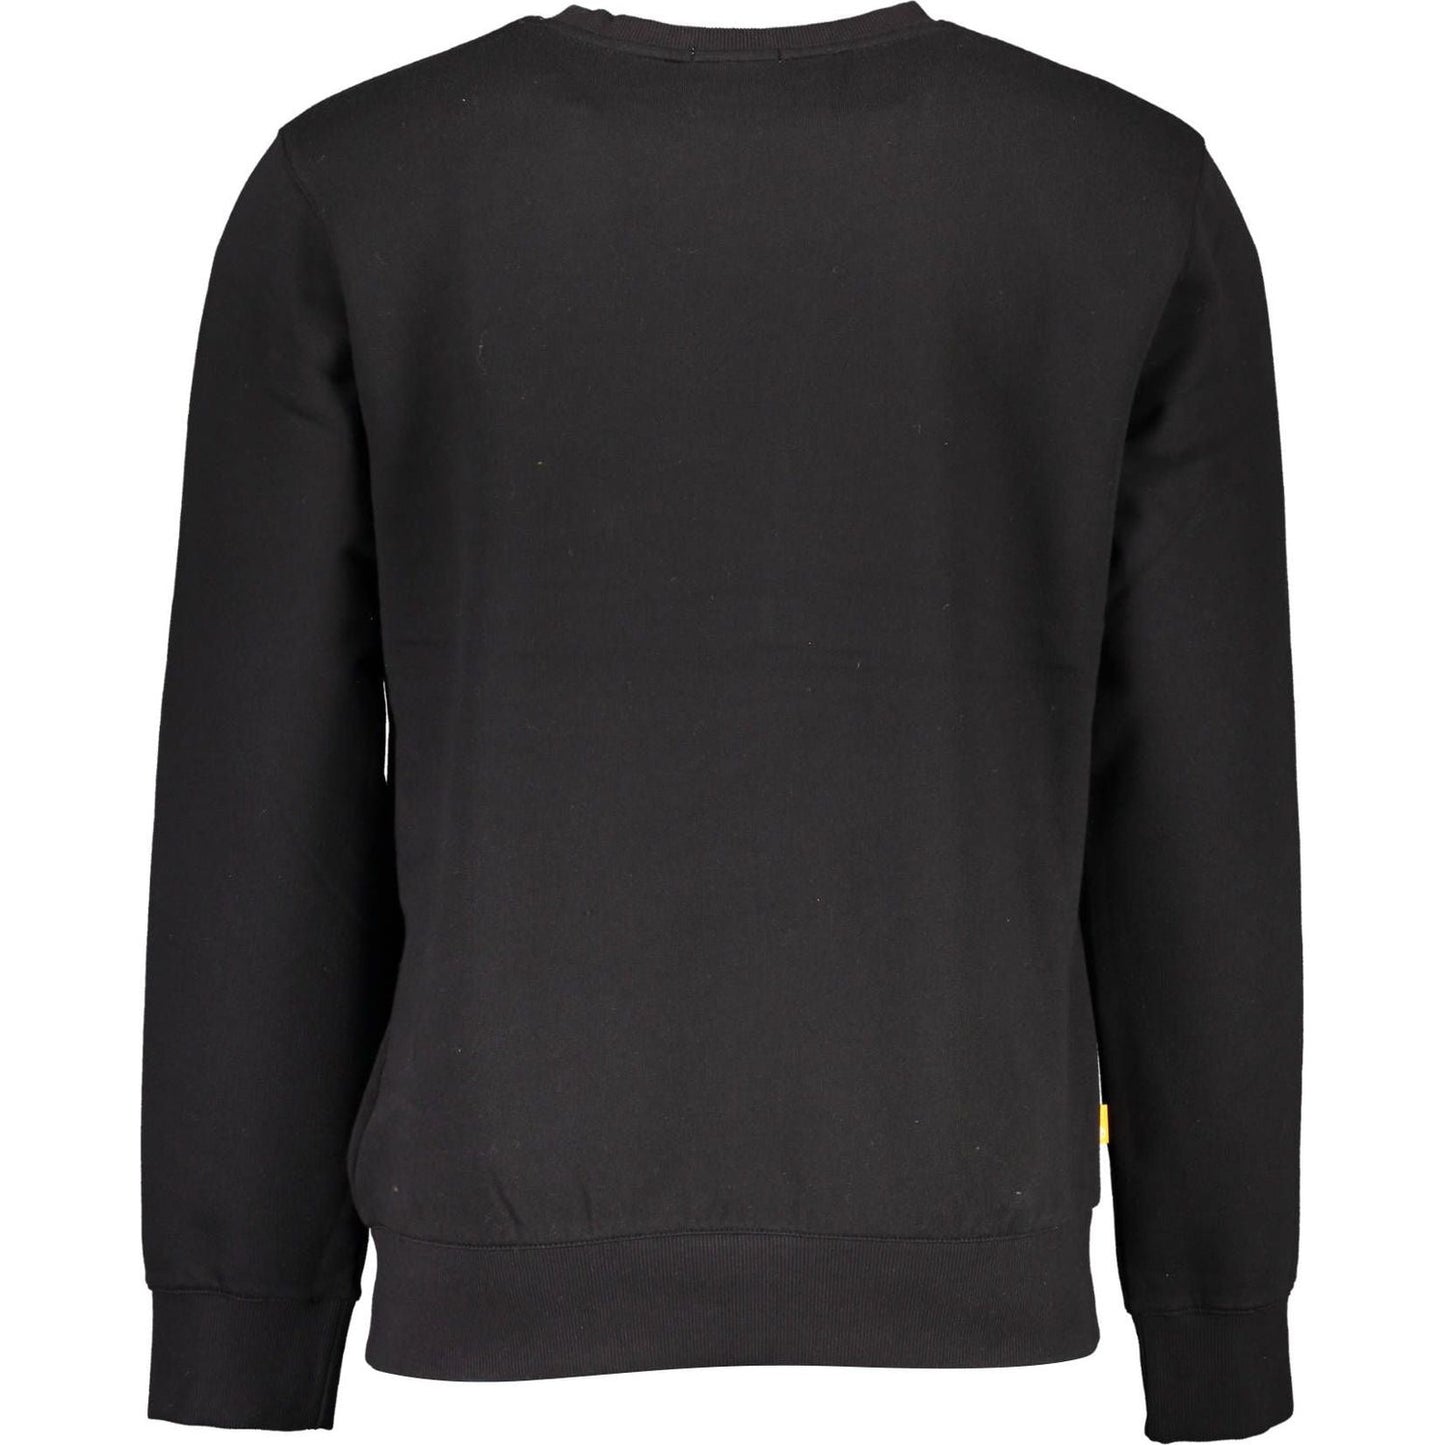 Timberland Sleek Organic Cotton Blend Sweater sleek-organic-cotton-blend-sweater